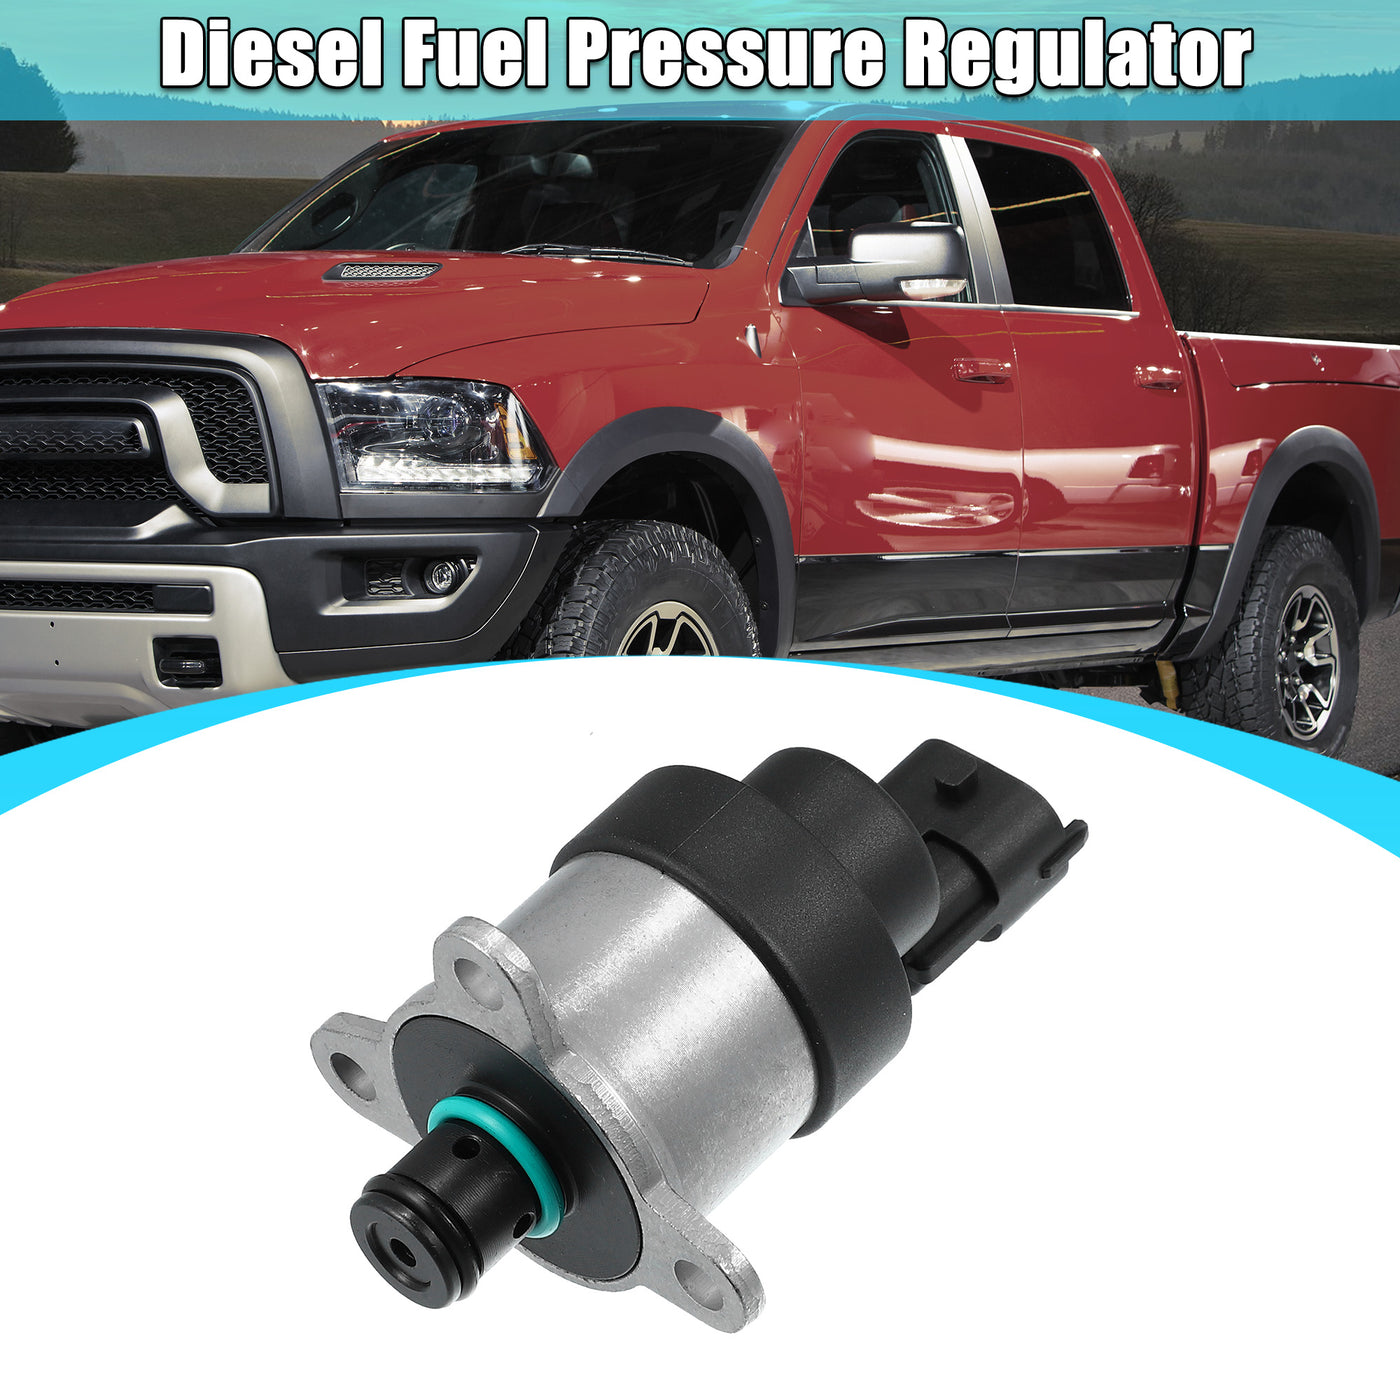 X AUTOHAUX Fuel Injection Pressure Regulator Fuel Control Actuator Measuring Unit Valve for Dodge for Ram 2500 3500 5.9L L6 - Diesel 0928400666 5183245AA Diesel Fuel Pressure Regulator